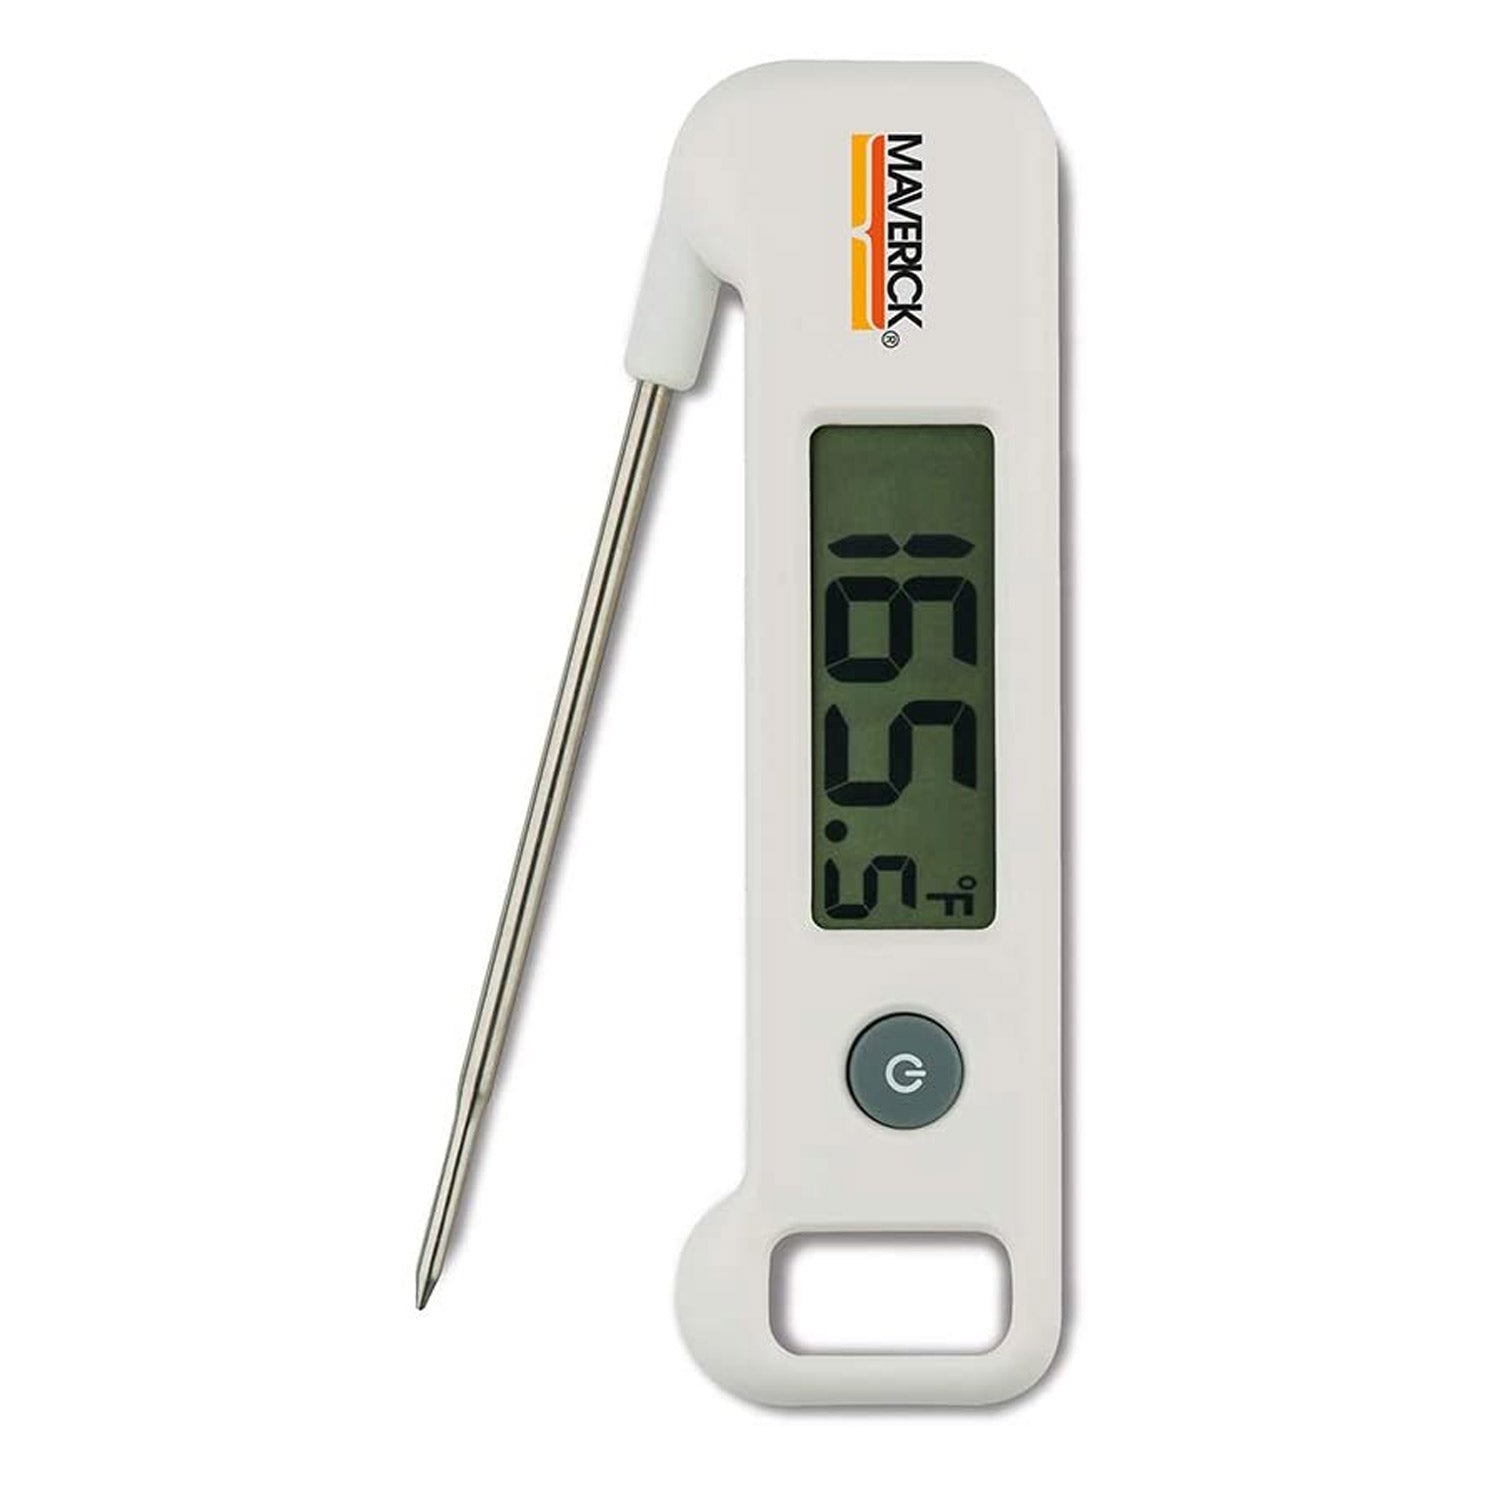 Maverick ET-8 Single Probe Thermometer Review